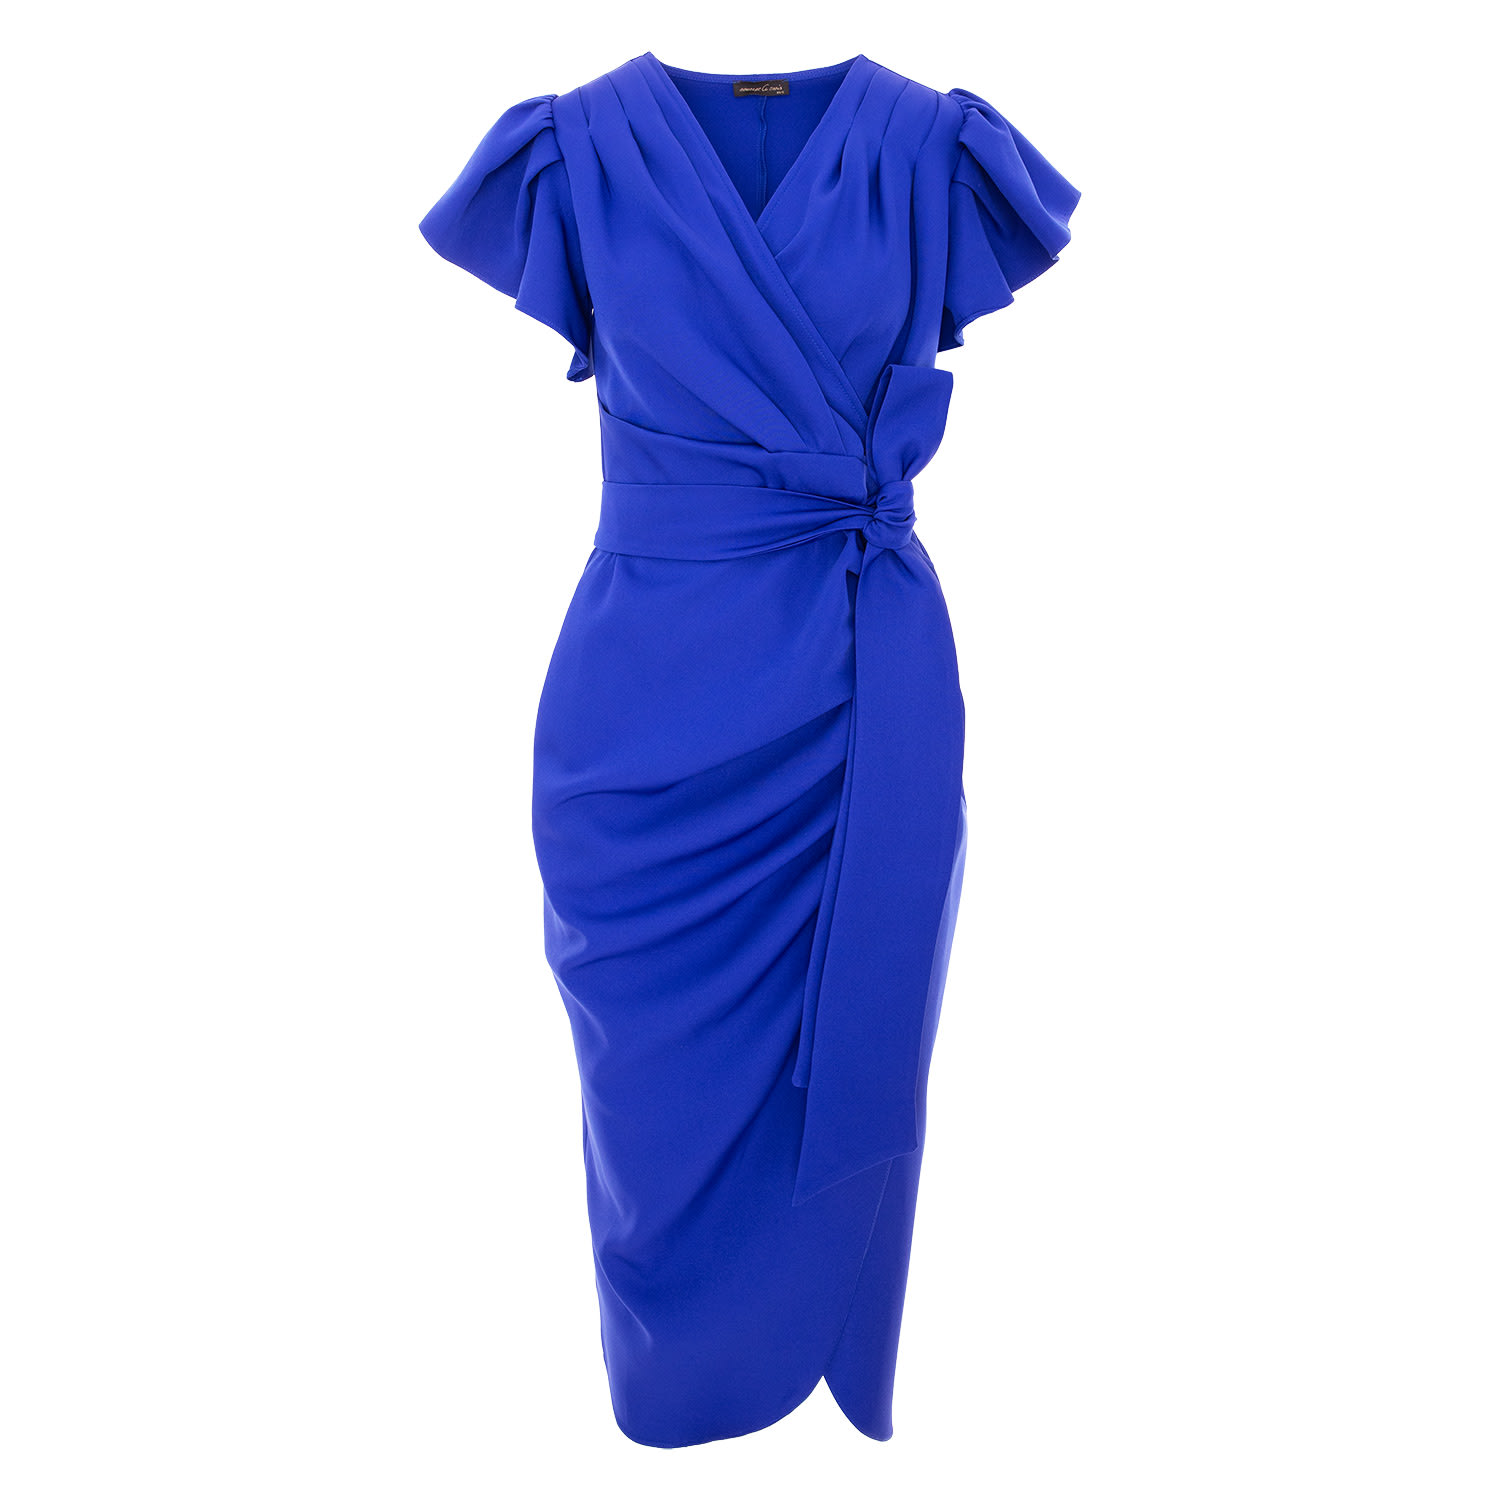 Women’s Wrap Cocktail Dress With Ruffles - Royal Blue Xs/S Concept a Trois